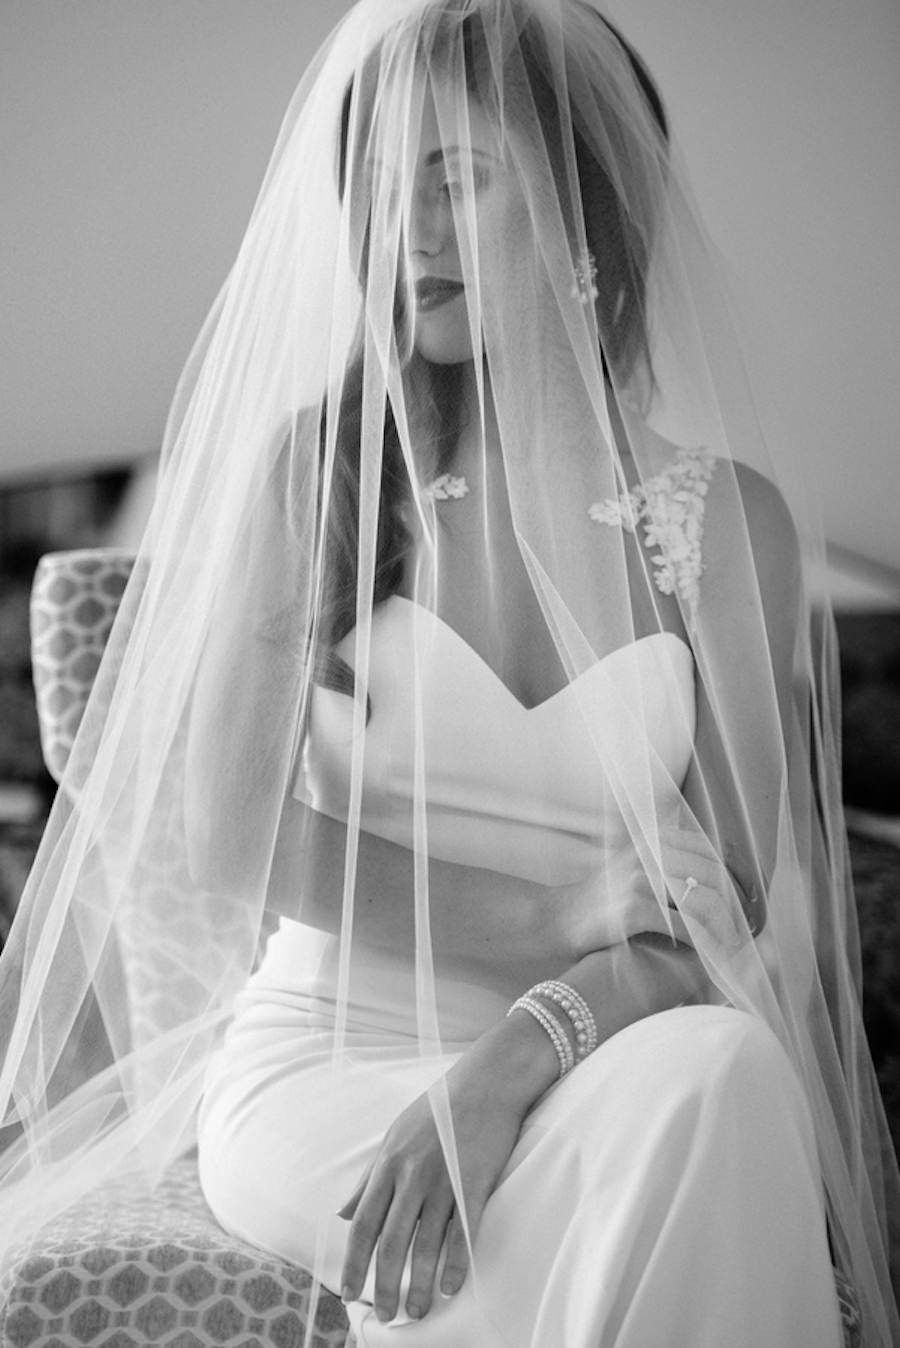 Bridal Wedding Portrait in White Wedding Dress and Chapel Length Veil